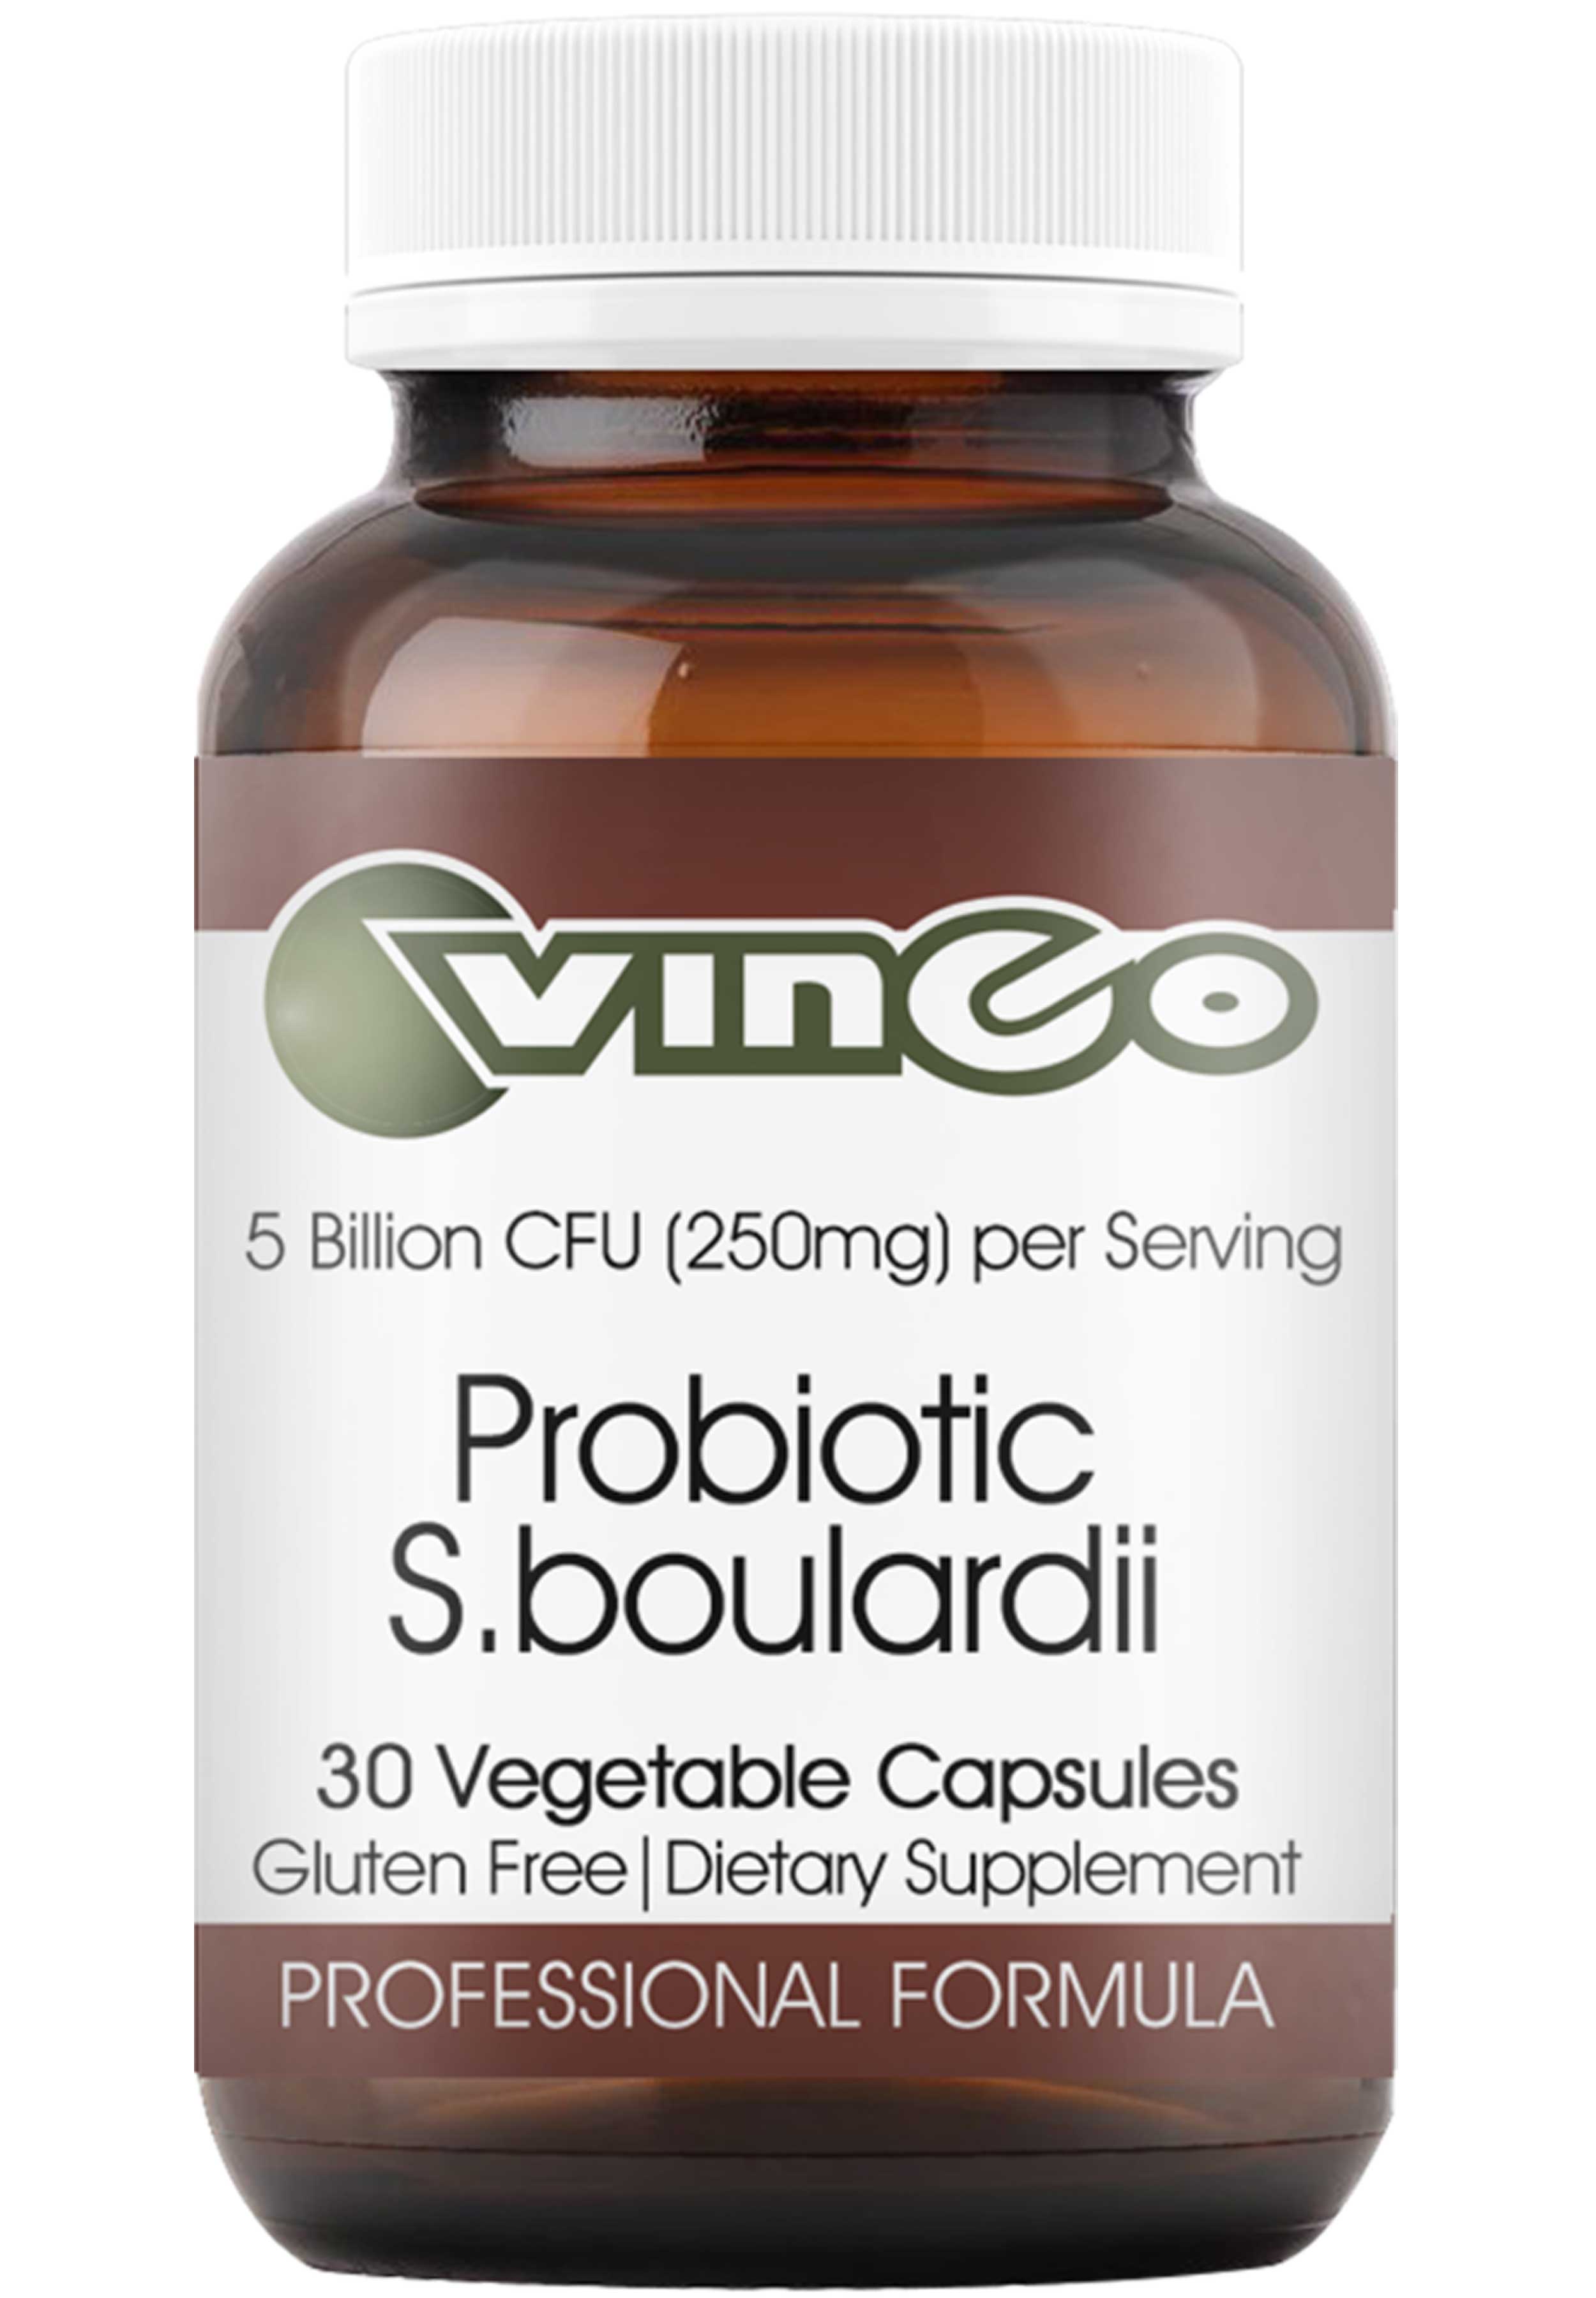 Vinco Probiotic S. boulardii